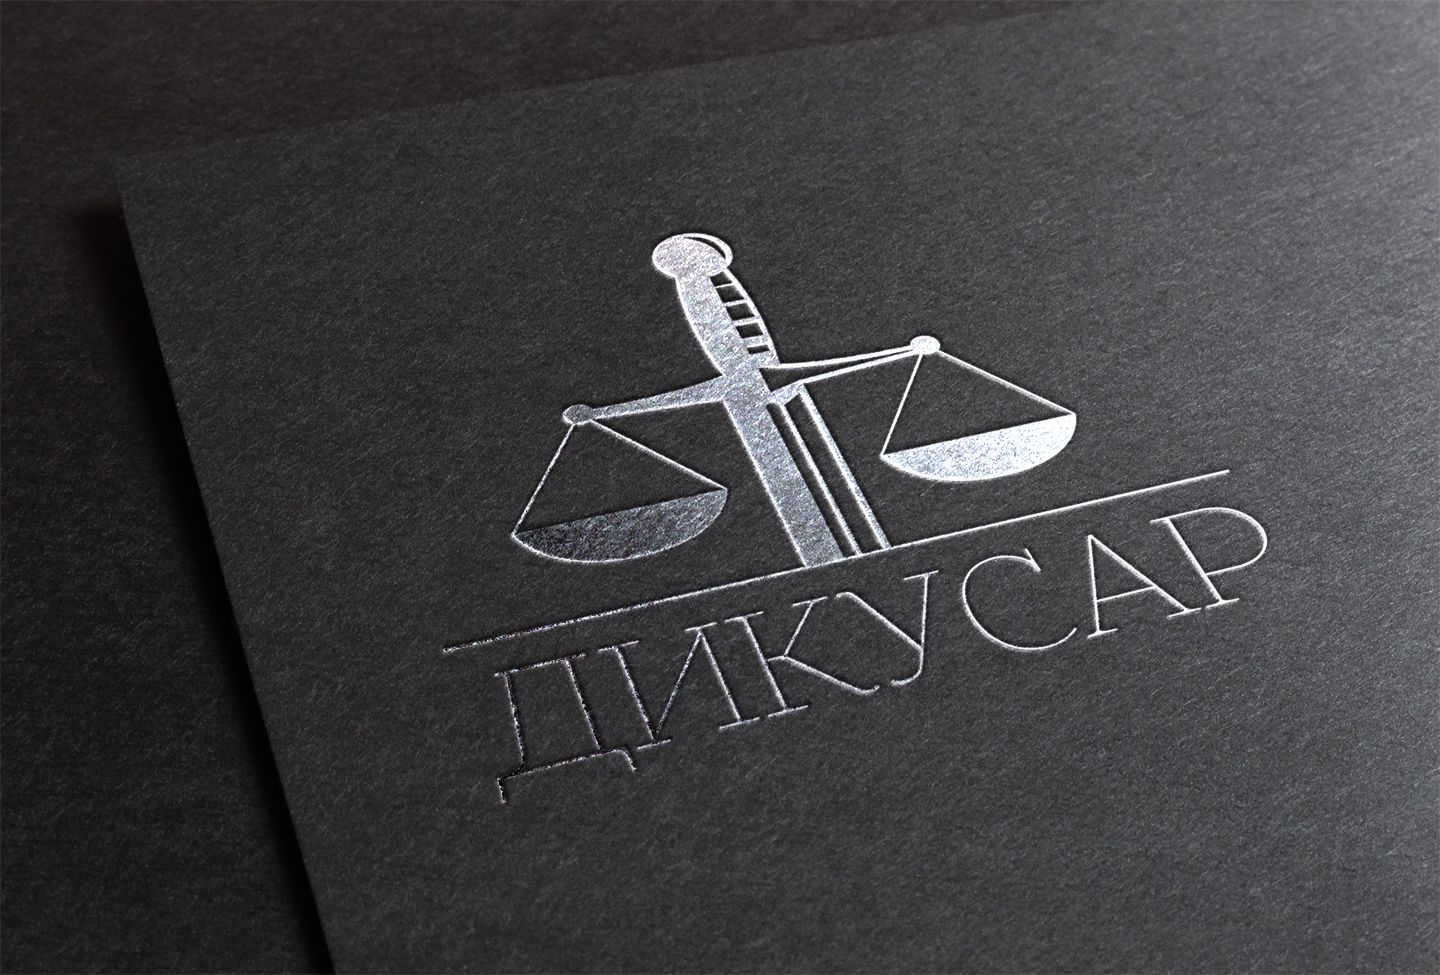 Логотип для адвоката - 